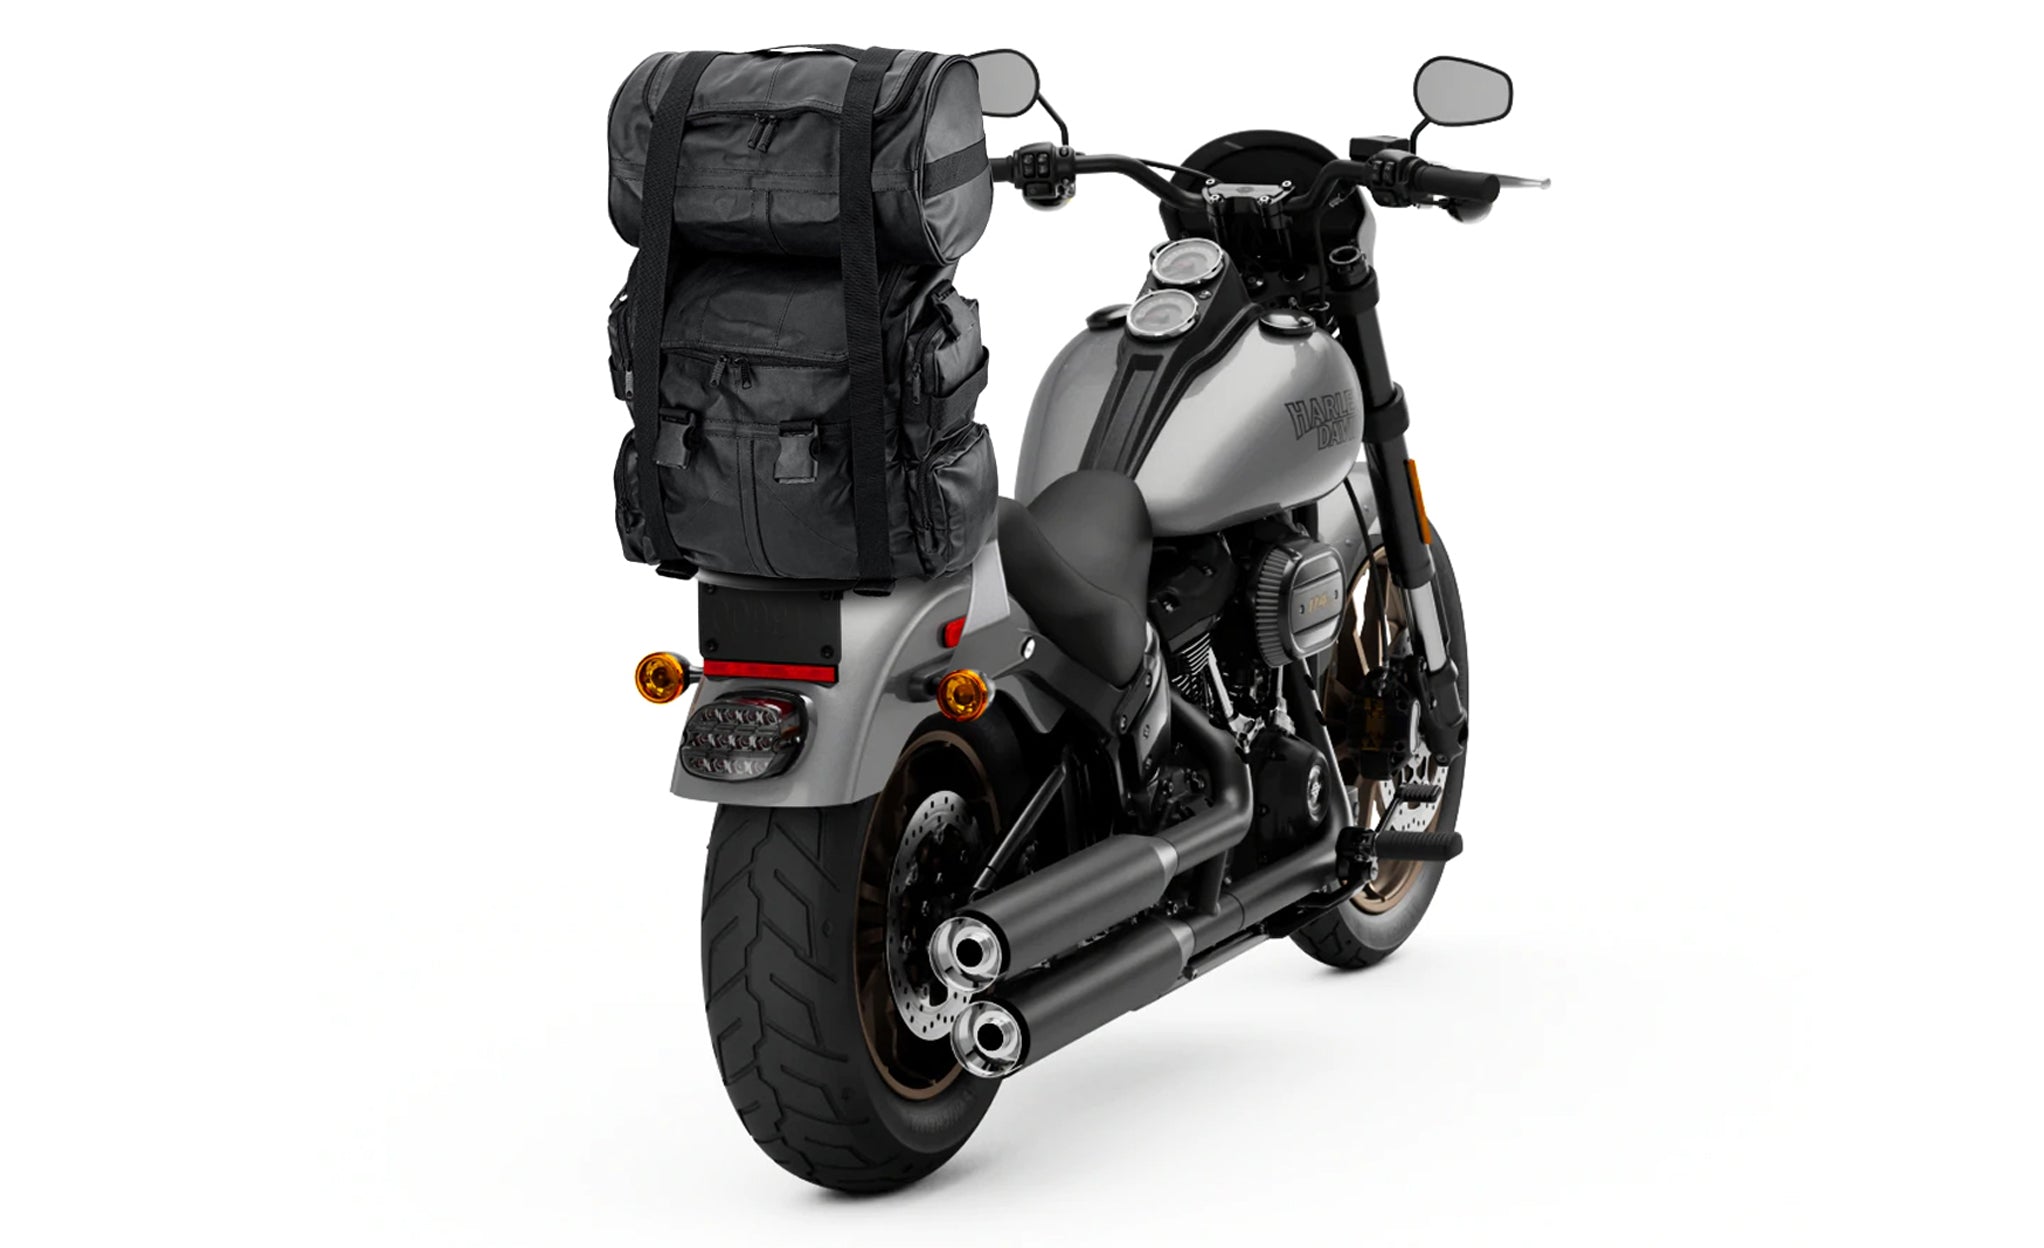 Viking Aero Expandable Medium Hyosung Motorcycle Sissy Bar Bag Bag on Bike View @expand